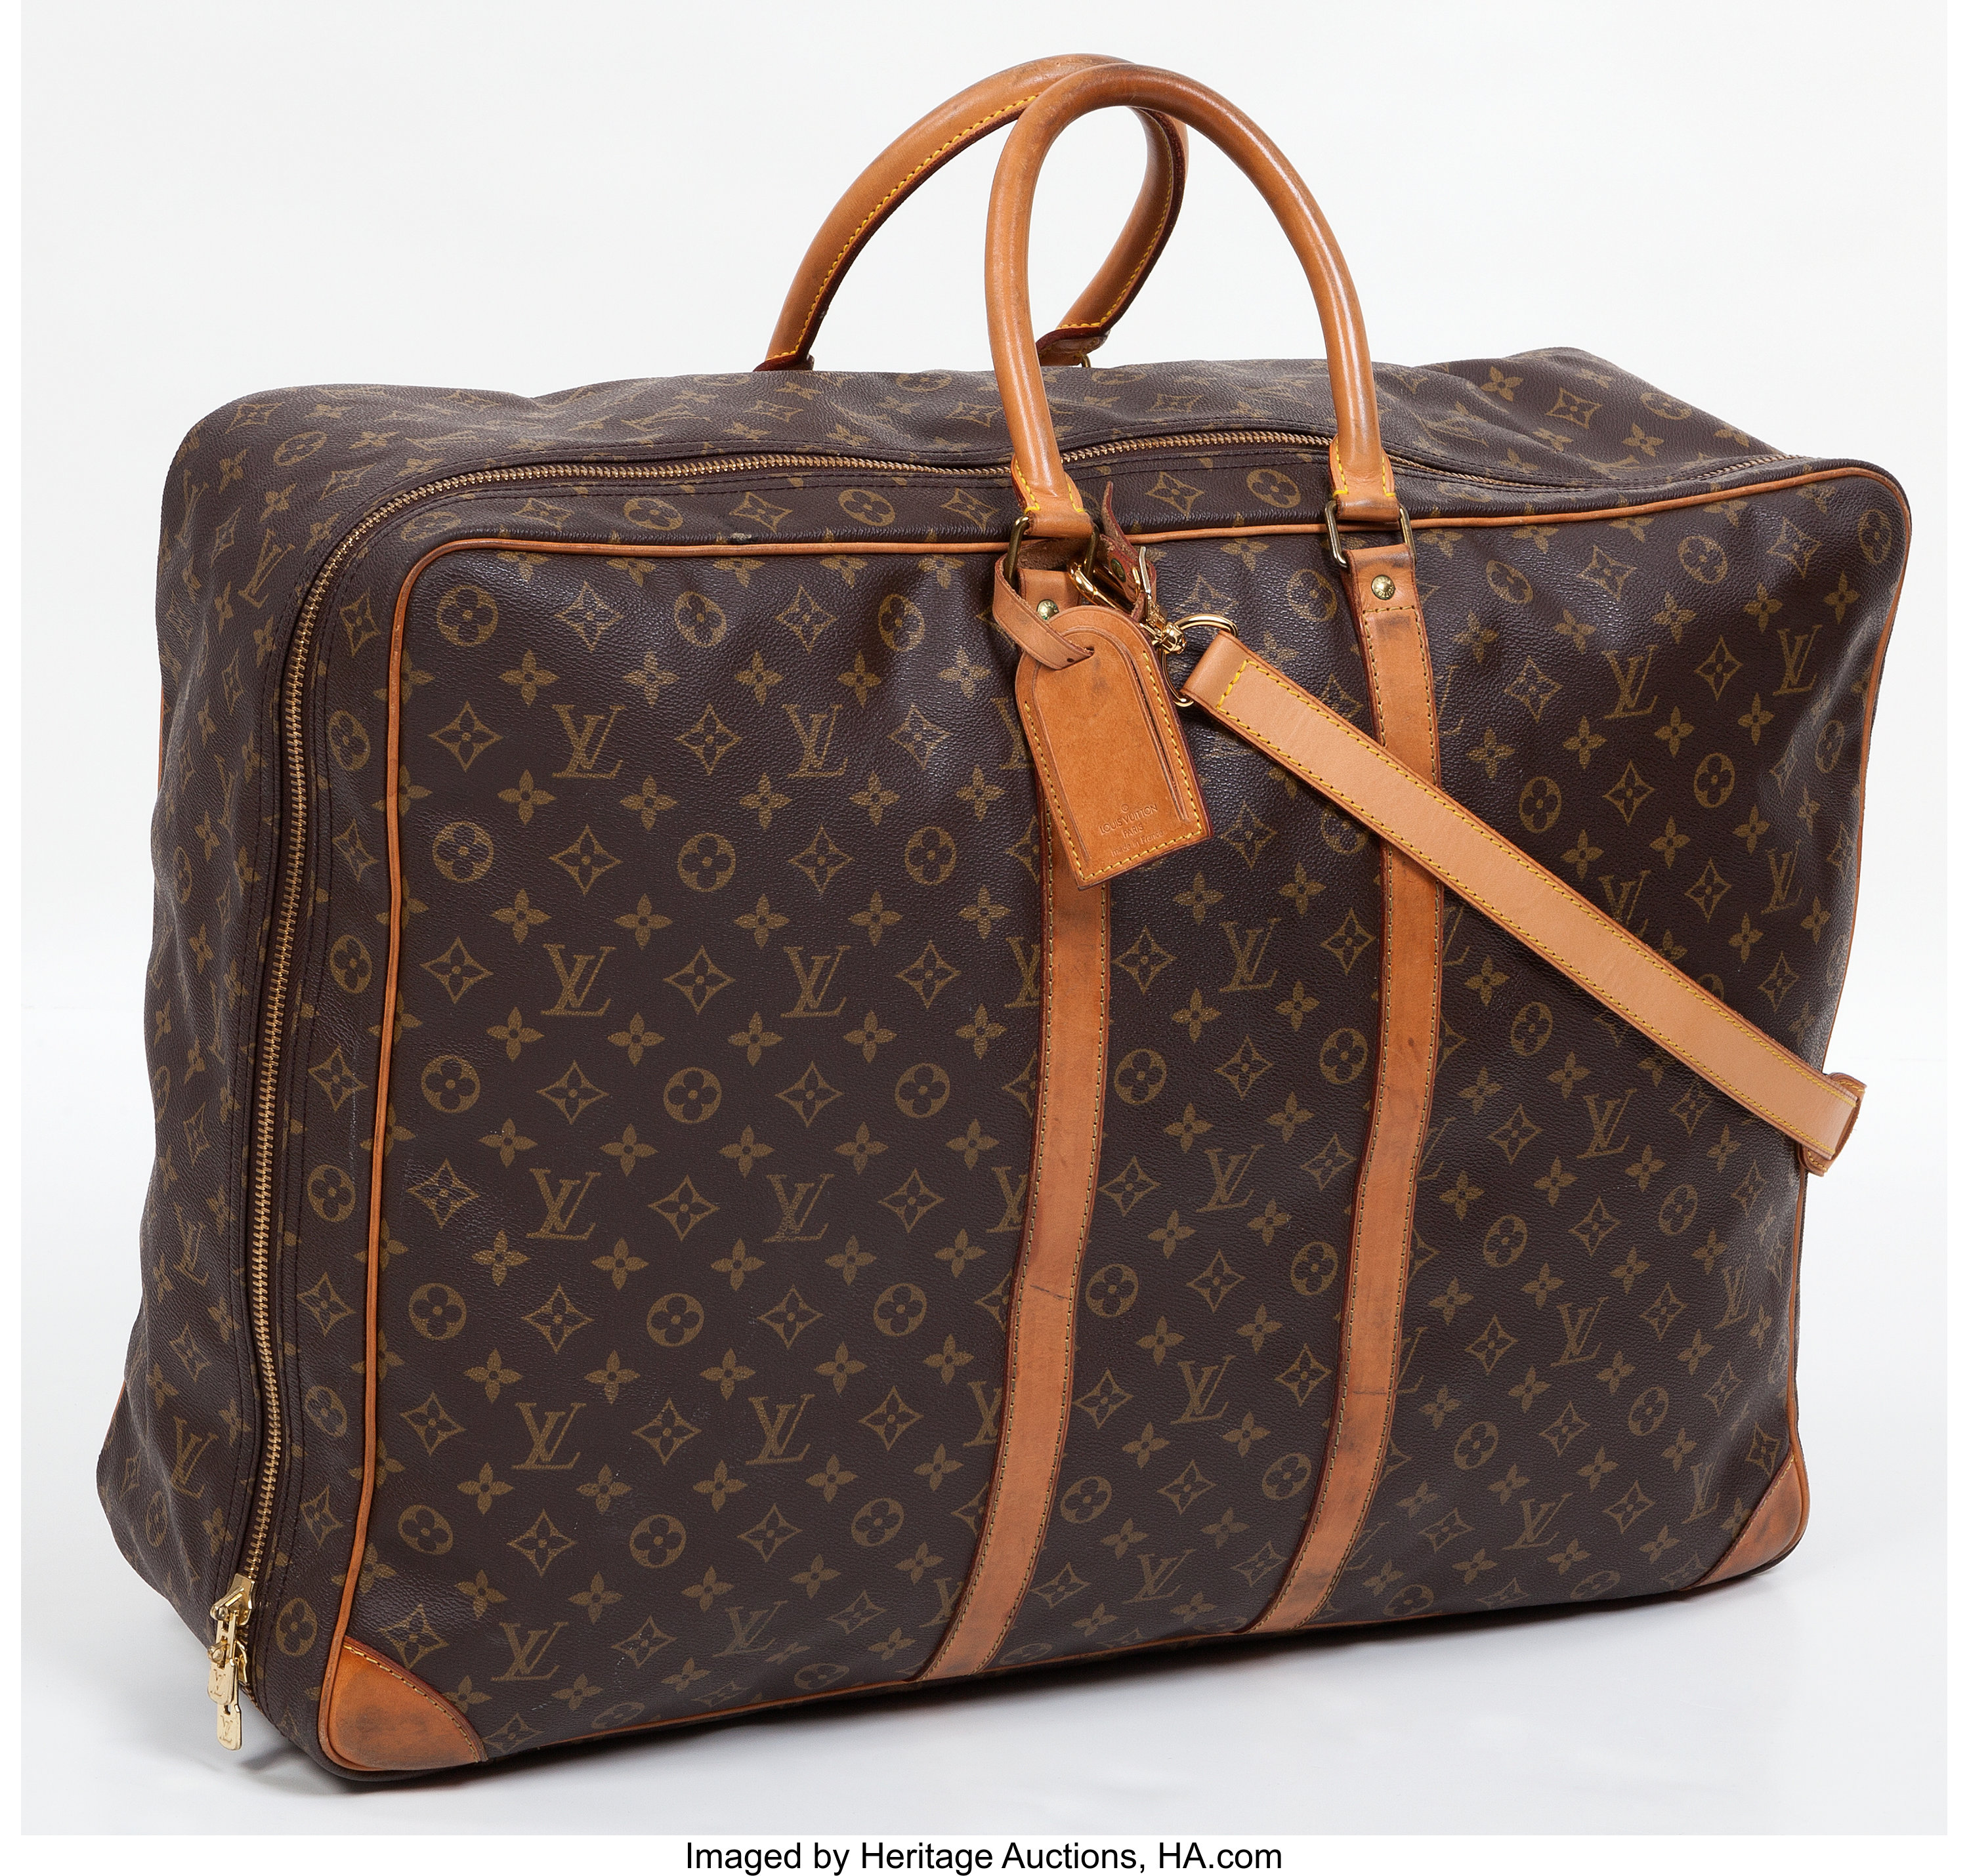 Louis Vuitton Sirius 70 Soft-Sided Luggage, Monogram Canvas, Large